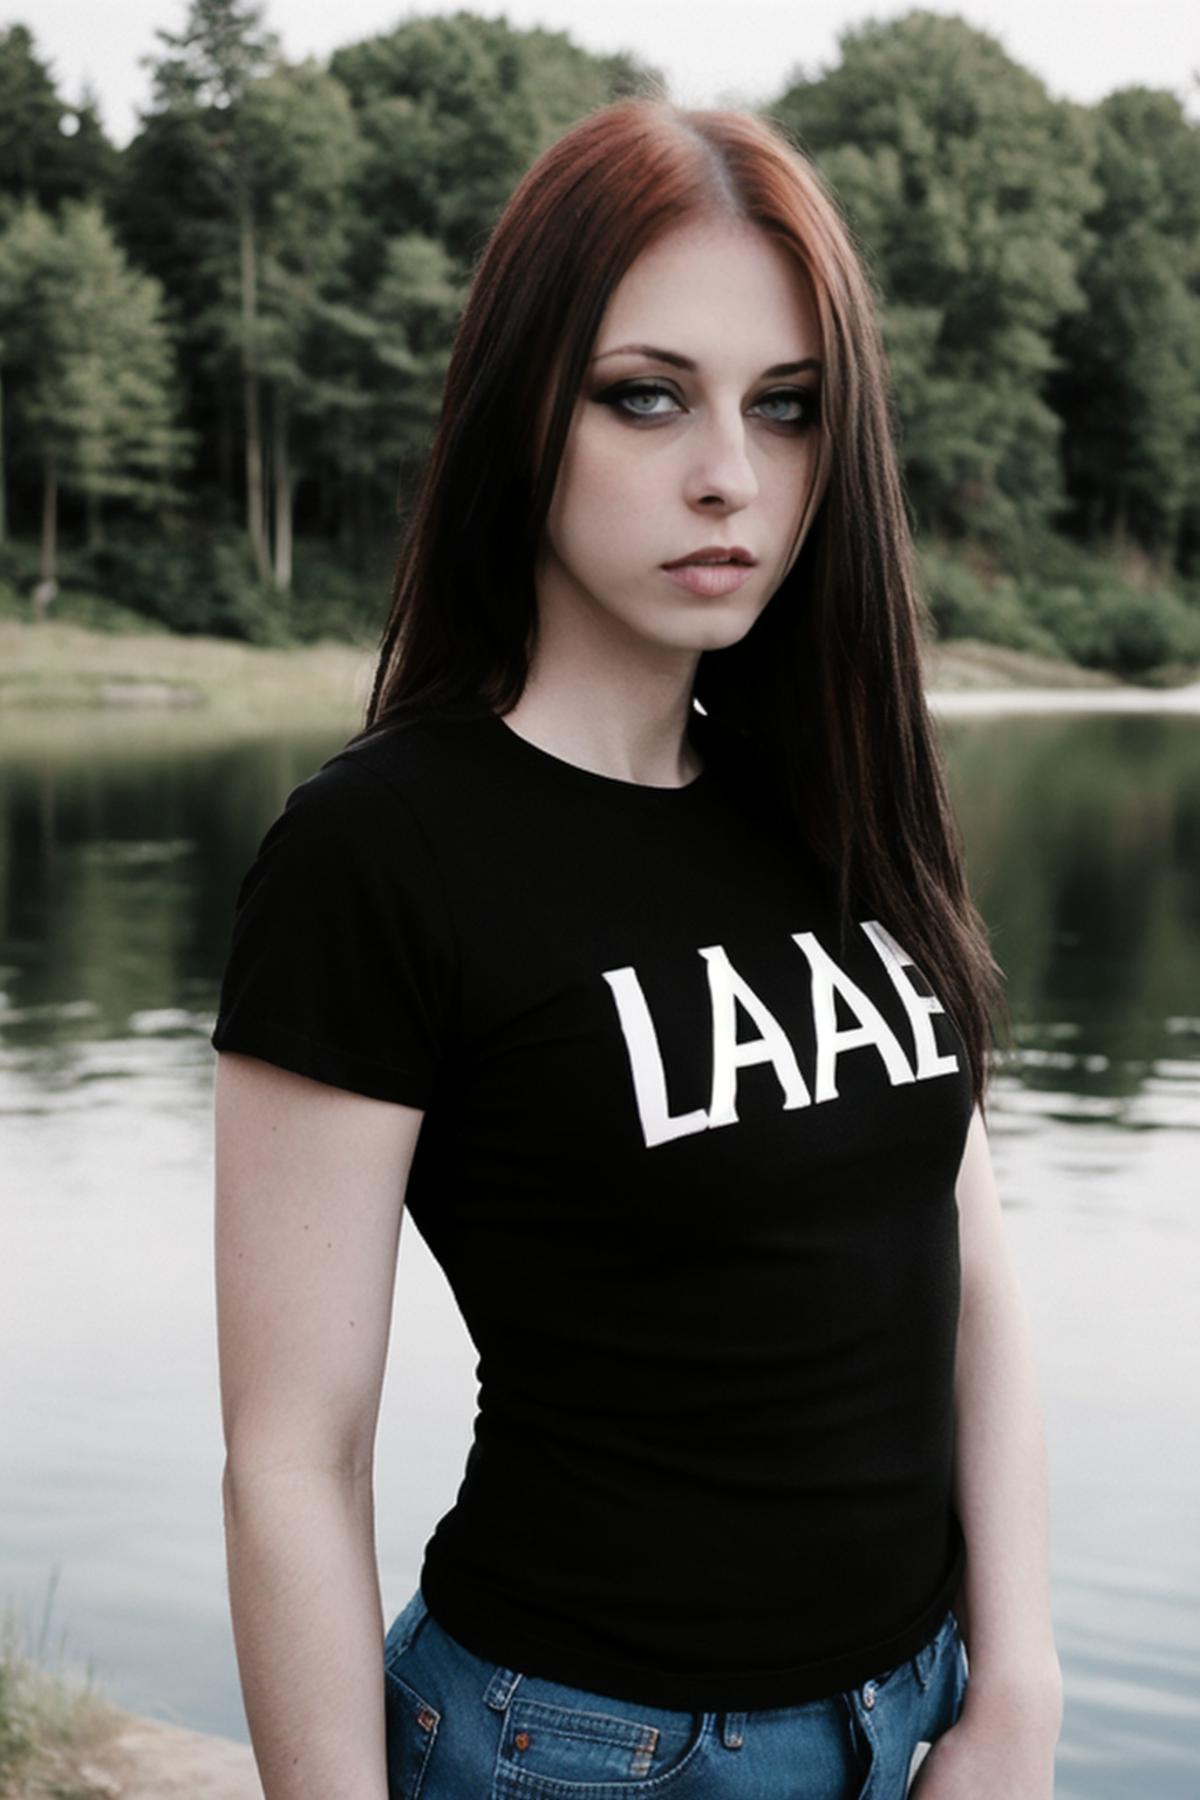 a RAW photo, portrait of lizvicious, wearing black t-shirt, jeans, lake at background <lora:LizVicious:1>